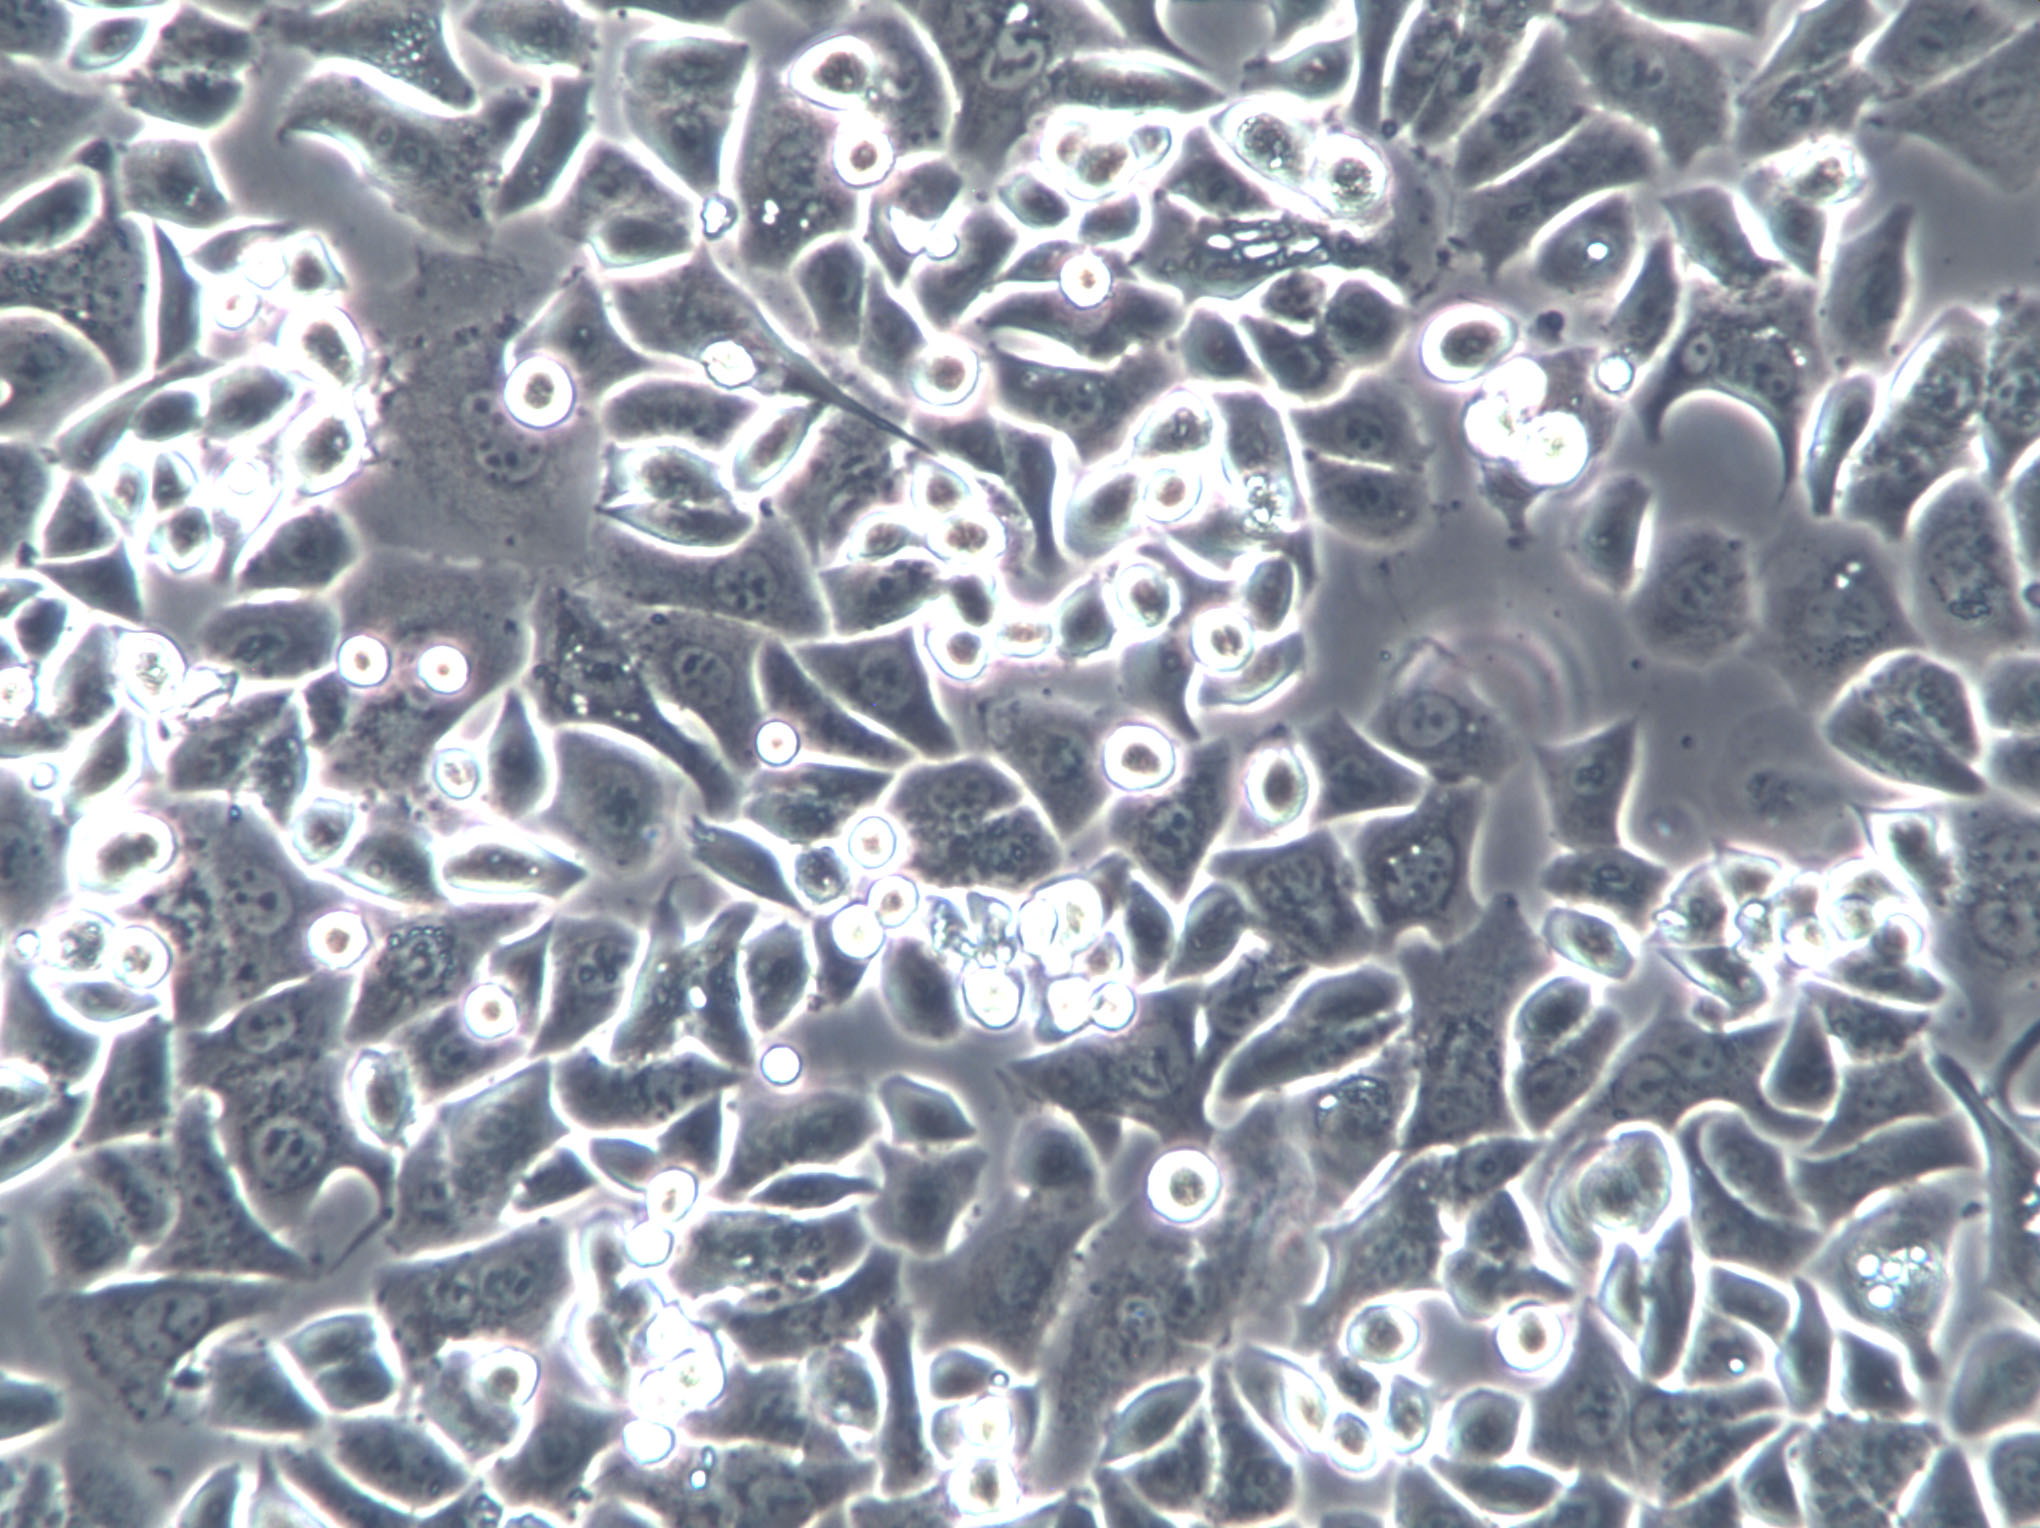 NCI-H2172 Cell|人非小细胞肺癌细胞,NCI-H2172 Cell